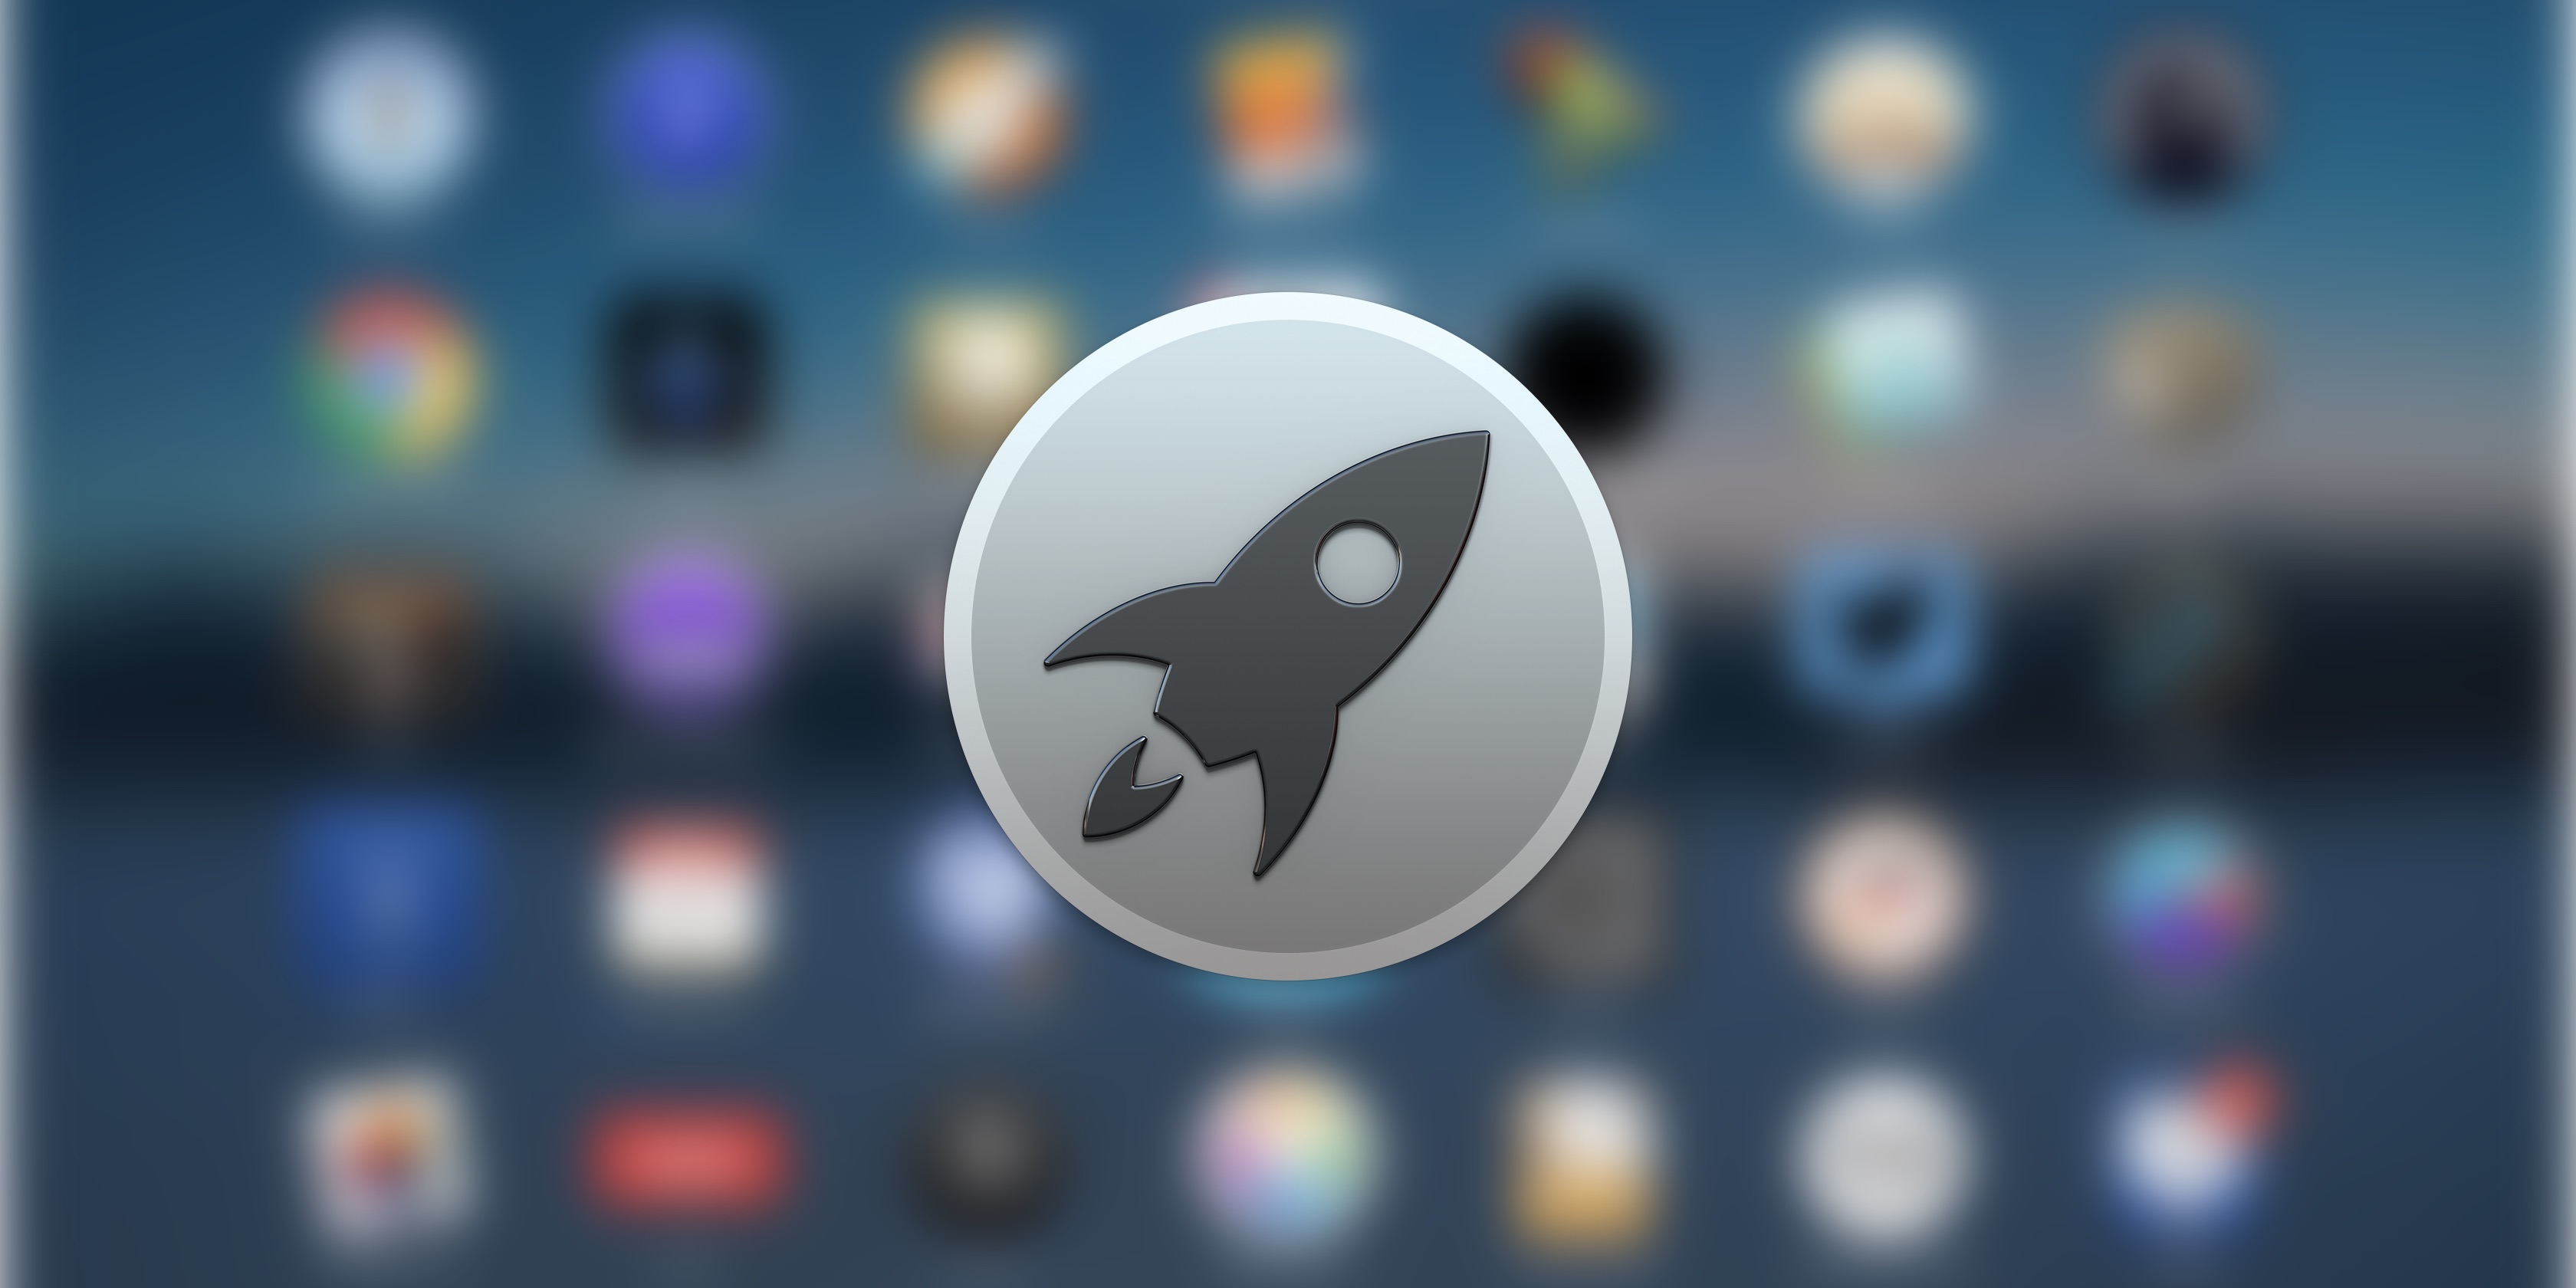 launchpad music app for mac